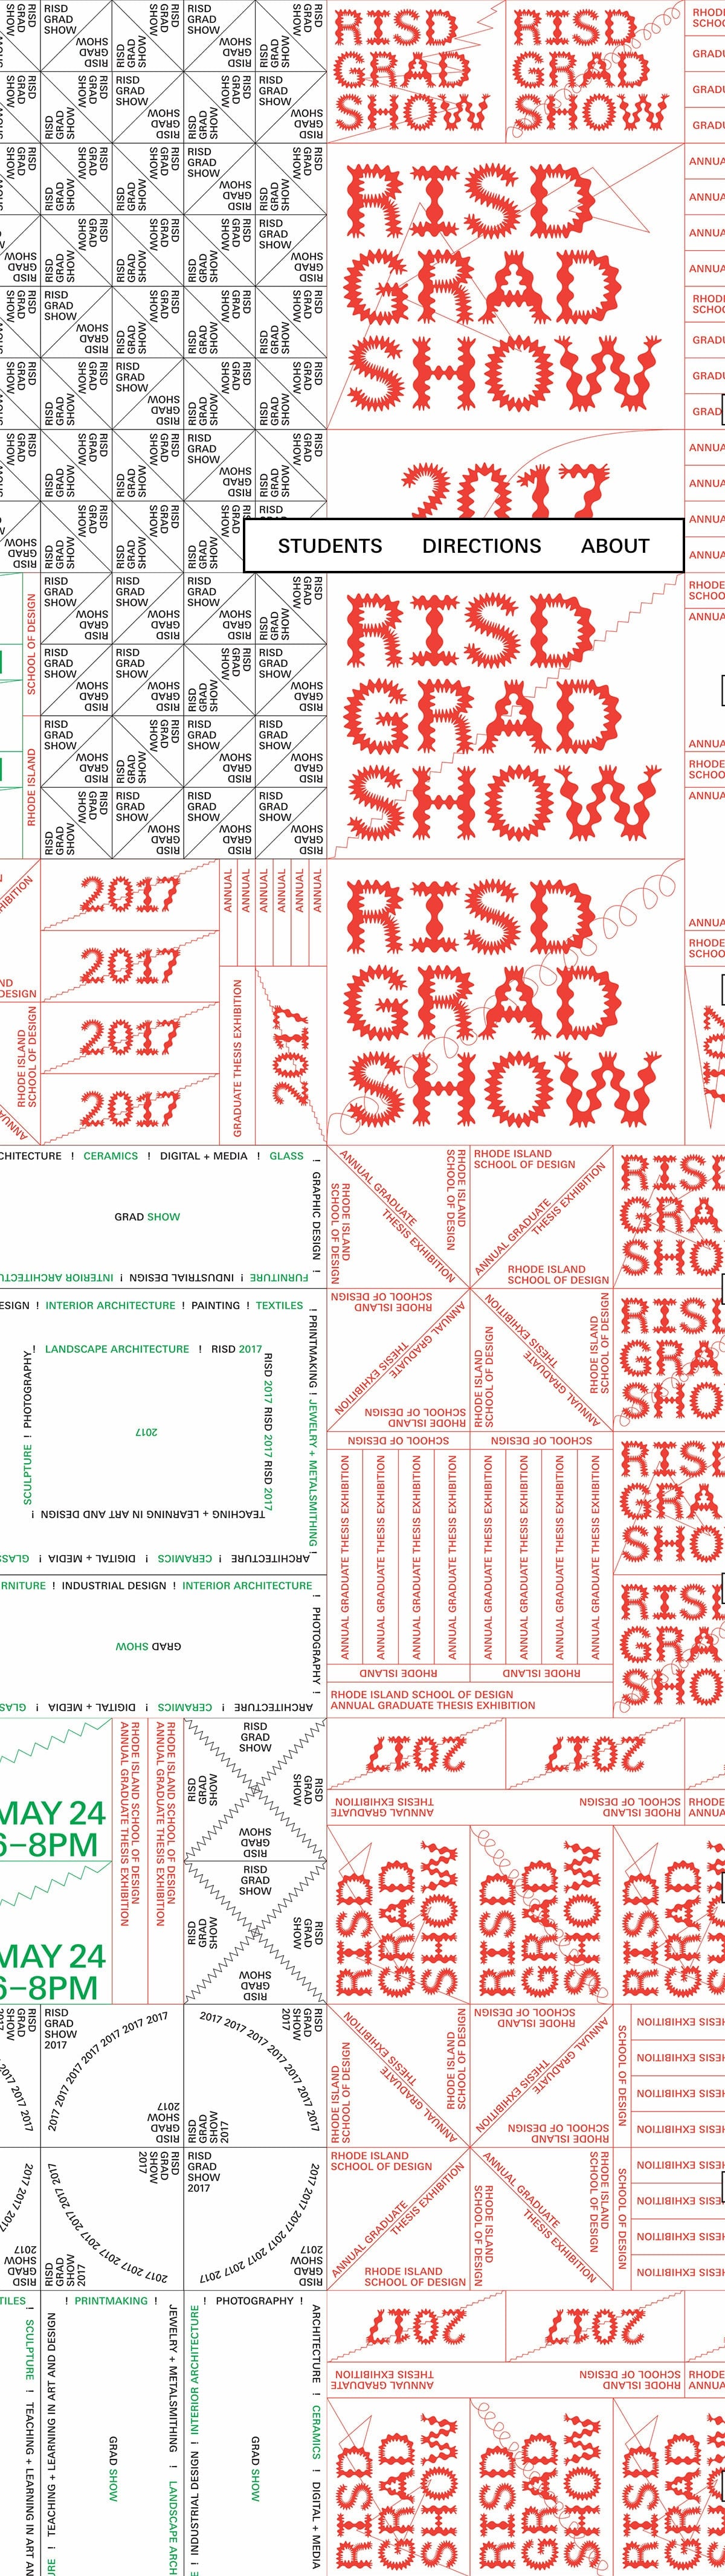 RISD Grad Show Mindsparkle Mag